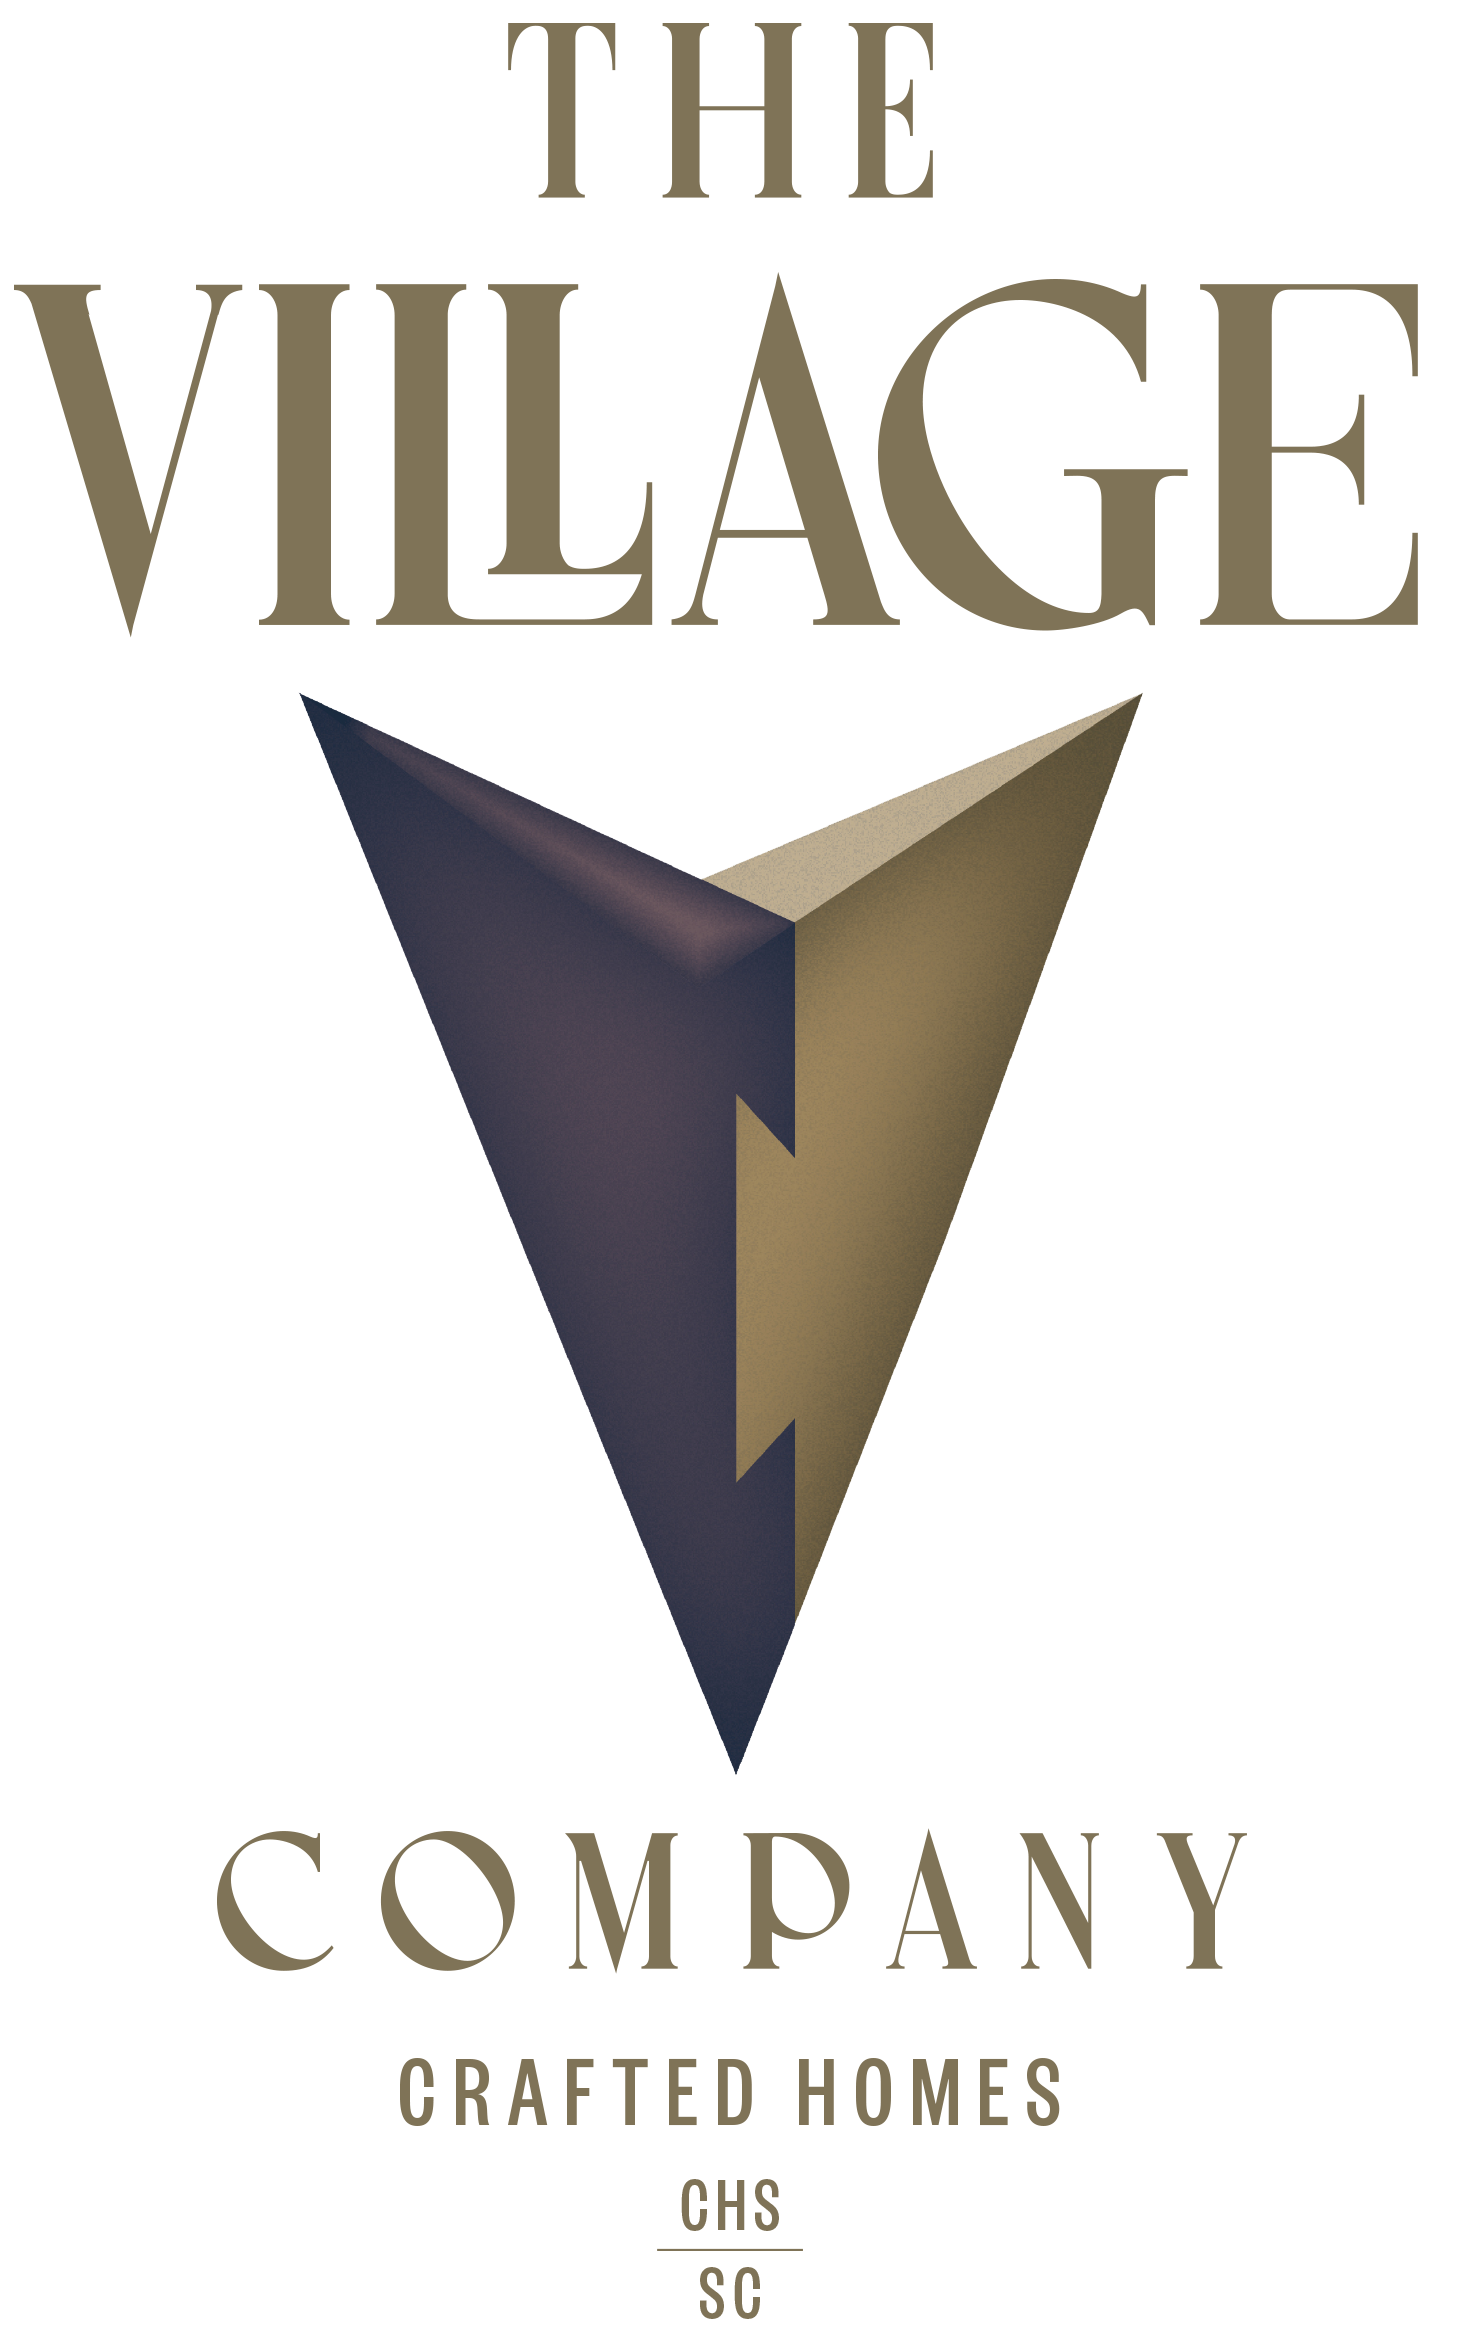 The Village Company